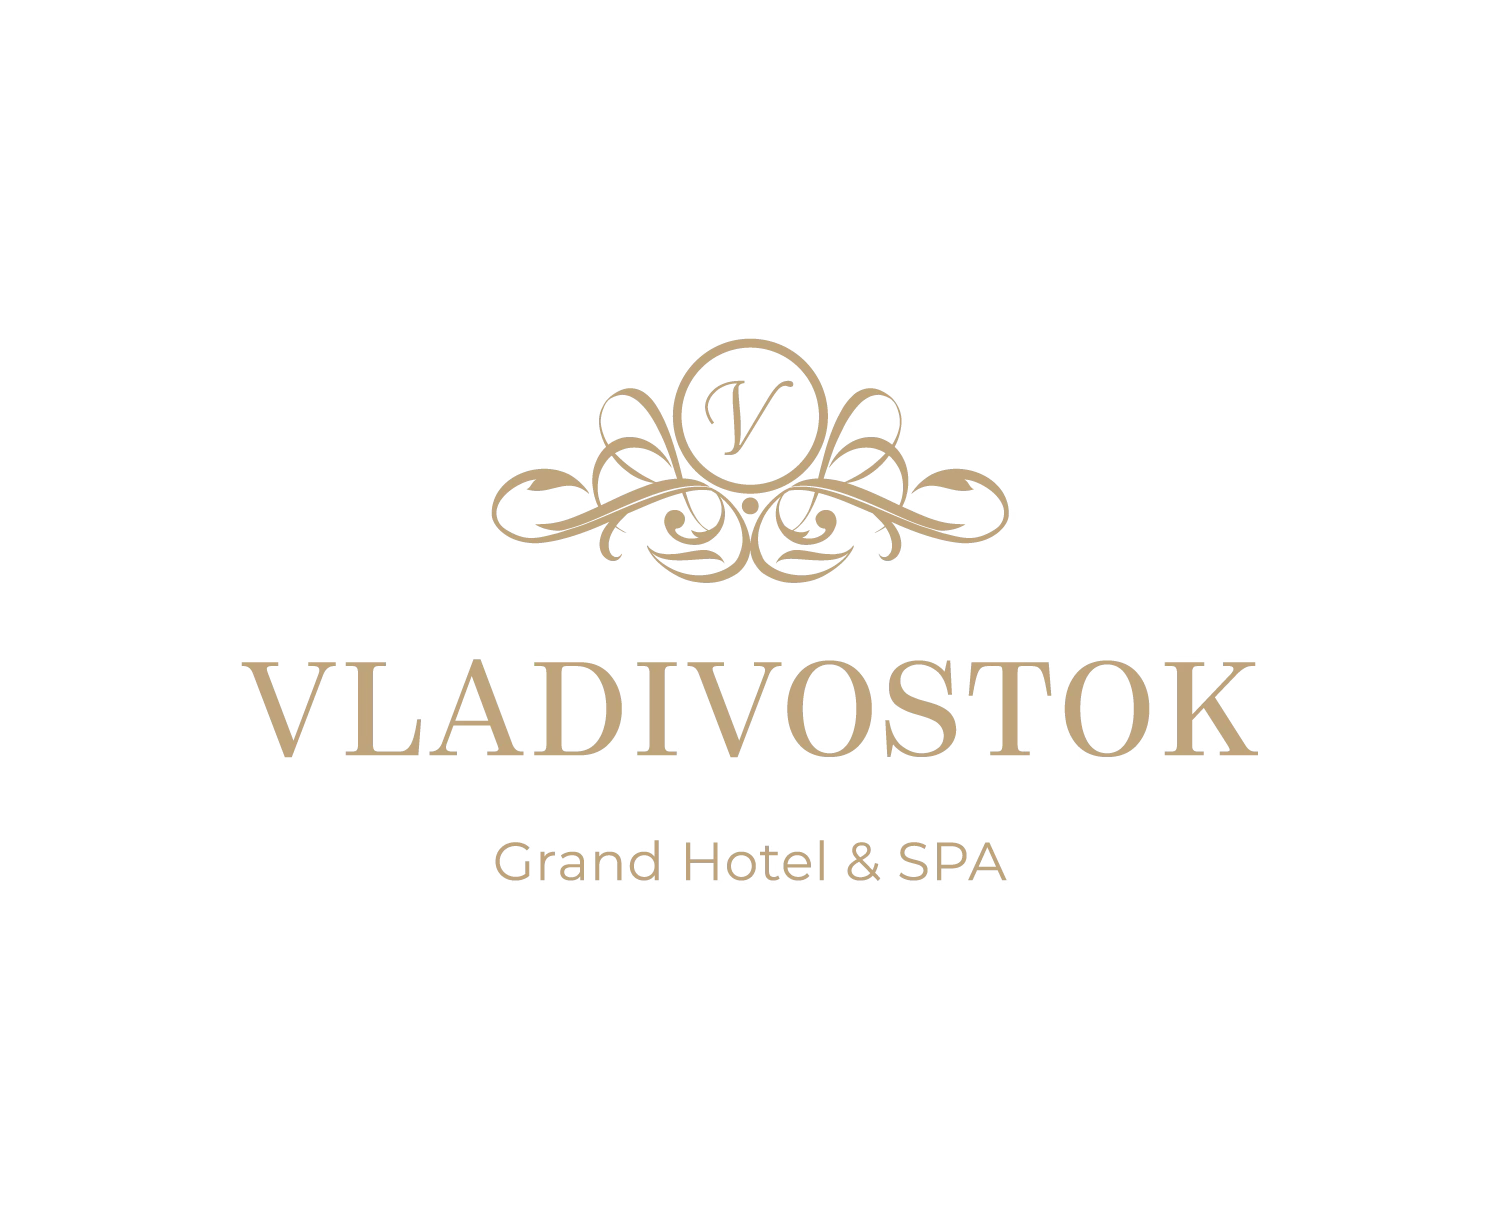 VLADIVOSTOK Grand Hotel & SPA